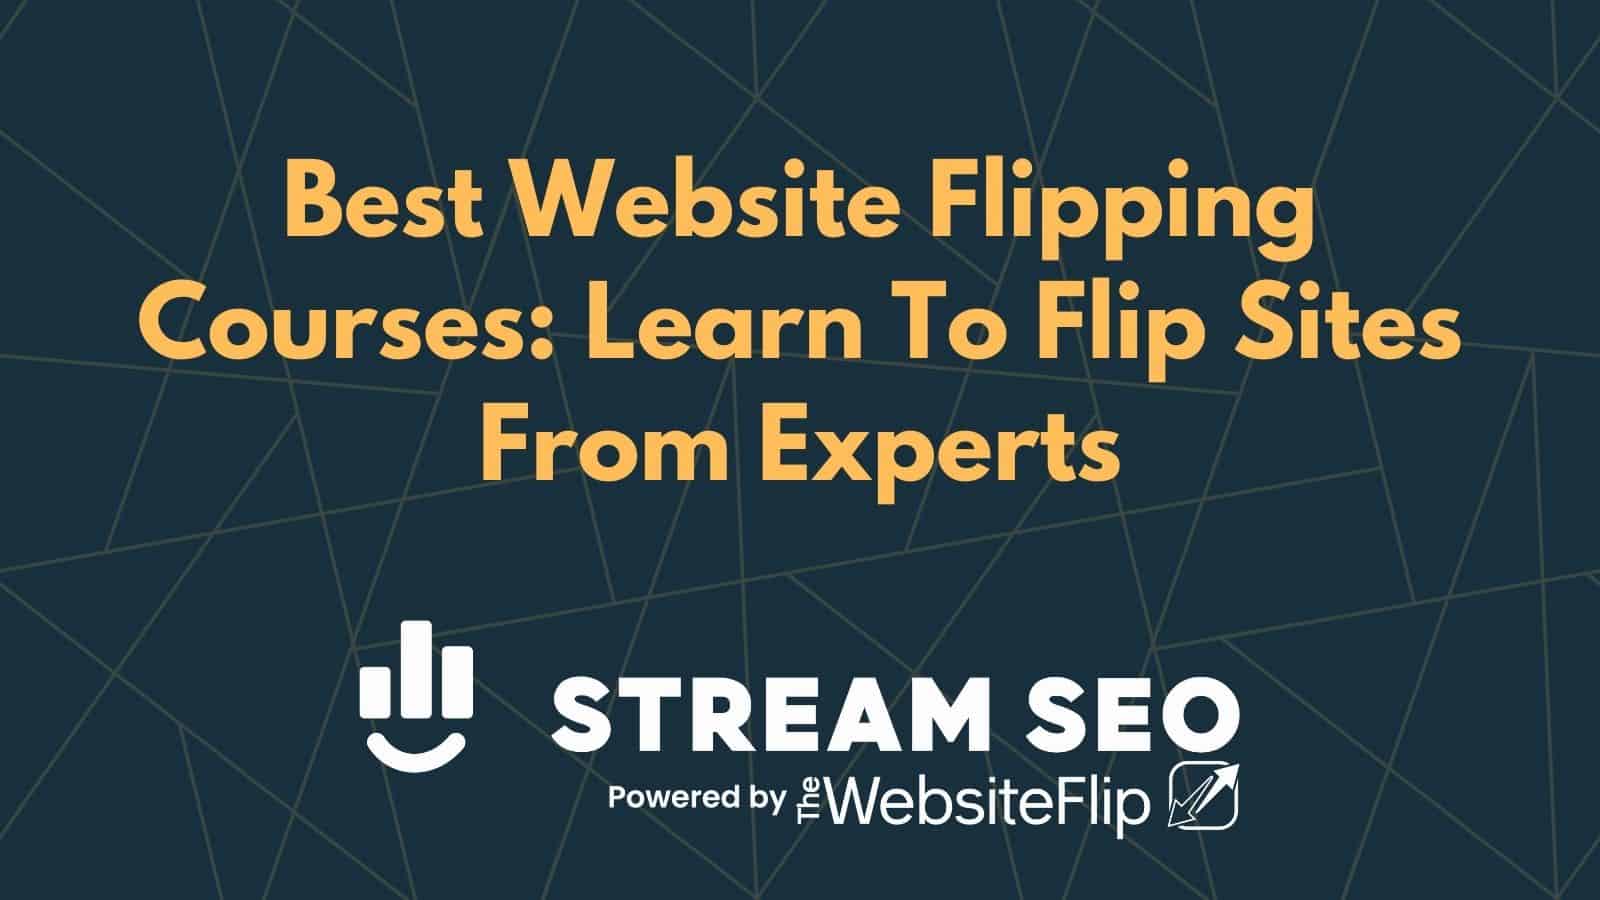 4 Best Website Flipping Courses